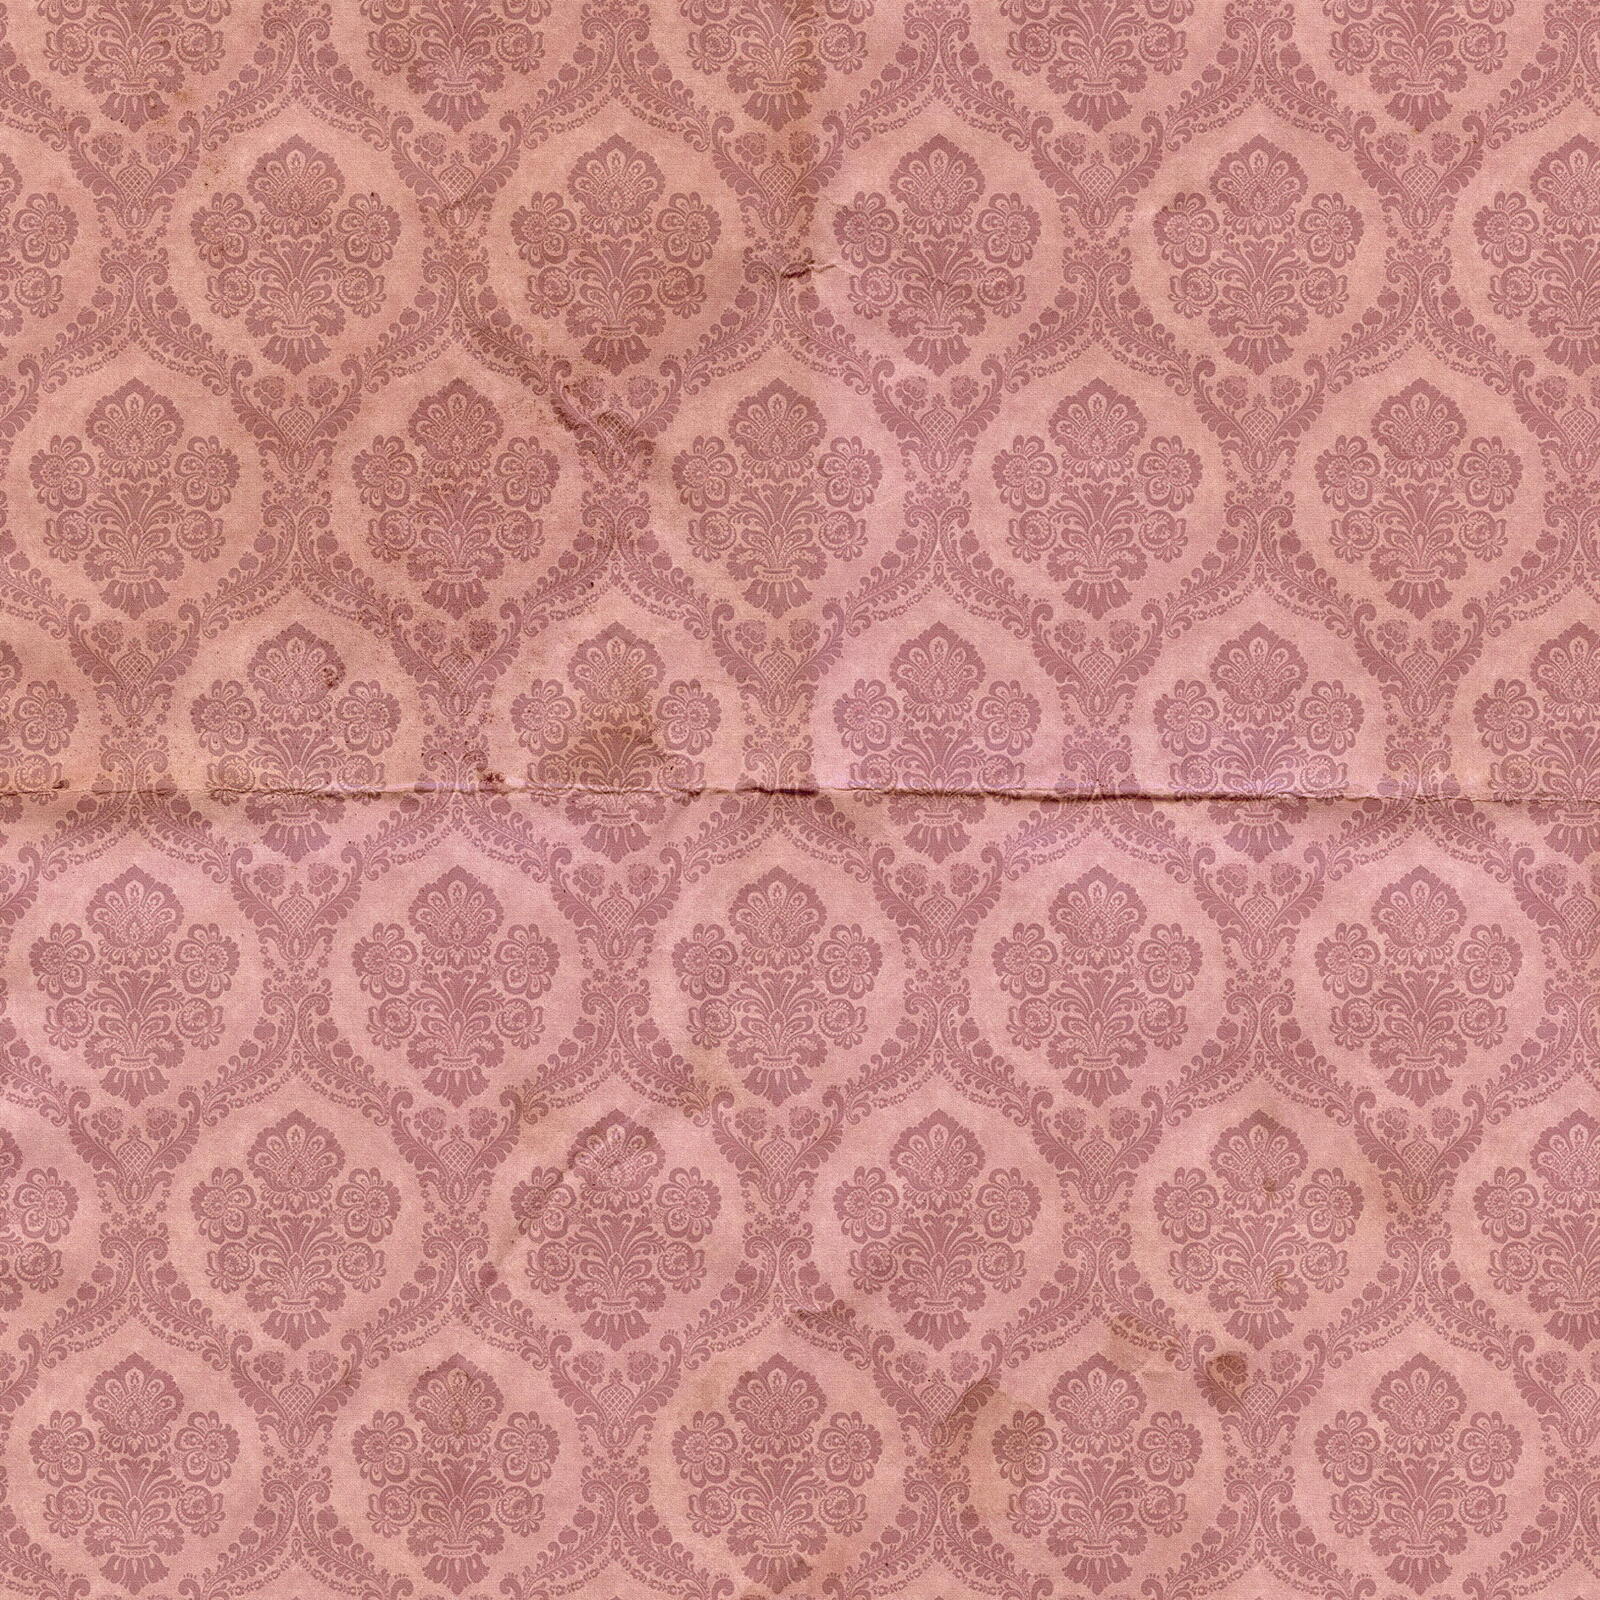 Wallpapers paper vintage texture on the desktop